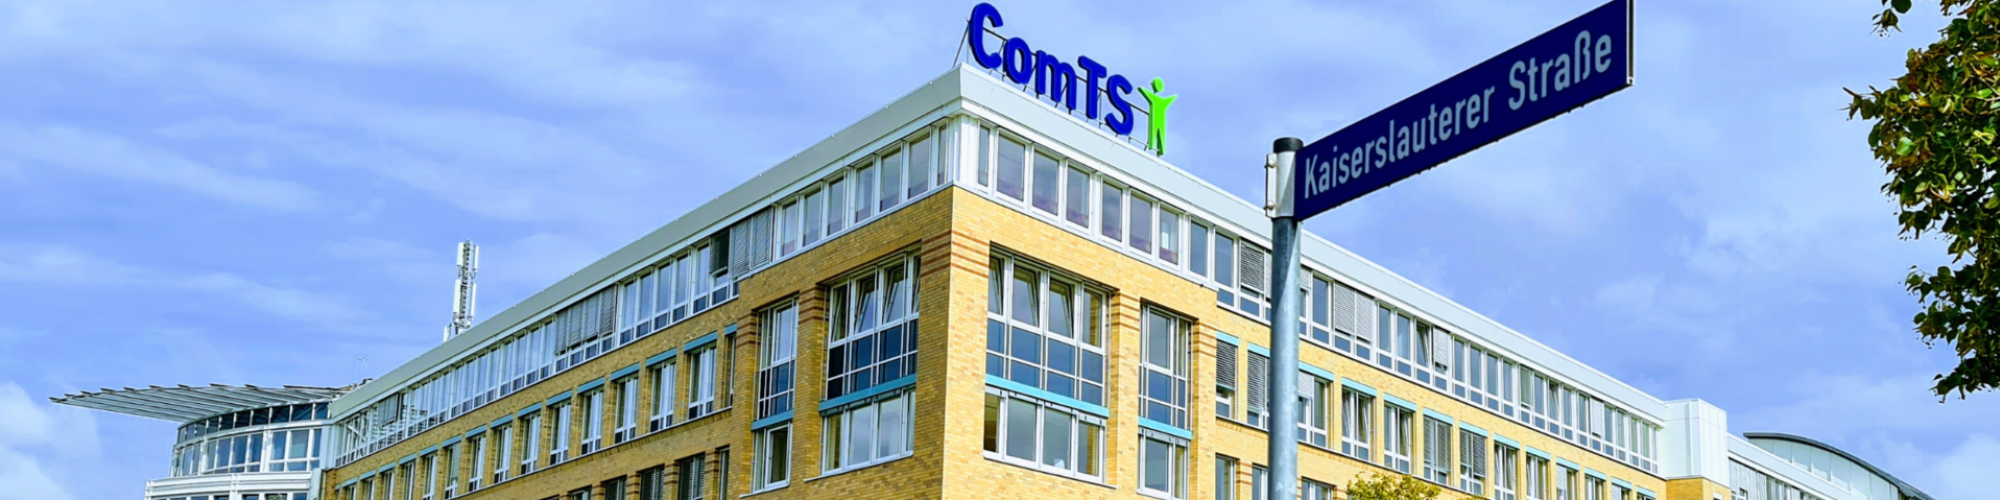 ComTS Finance GmbH